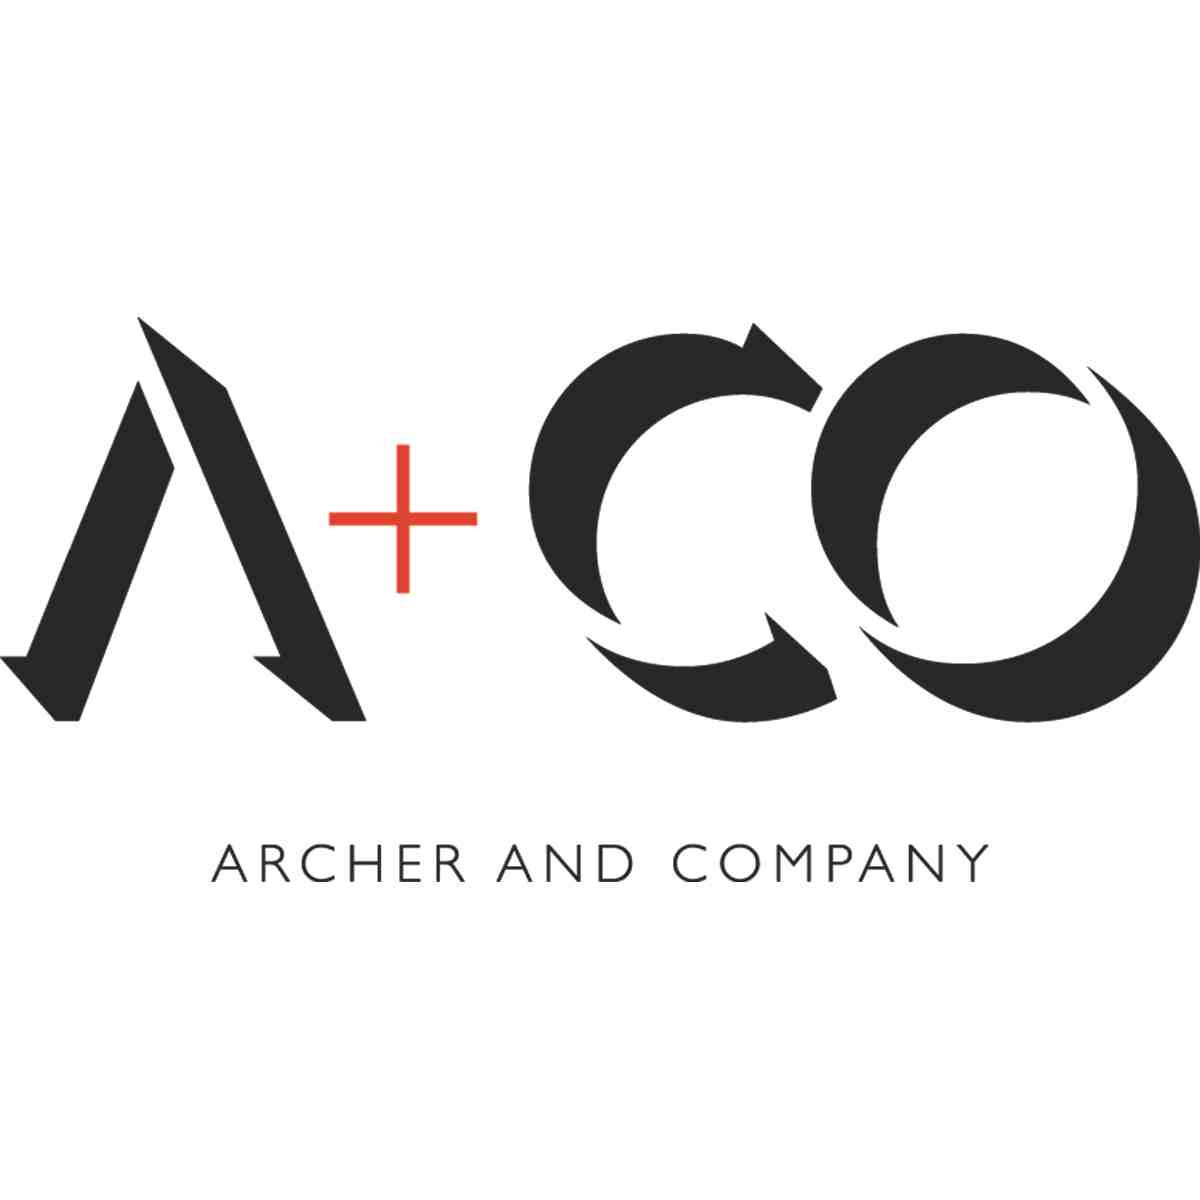 Archer + Co in Bristol for furniture and accessories